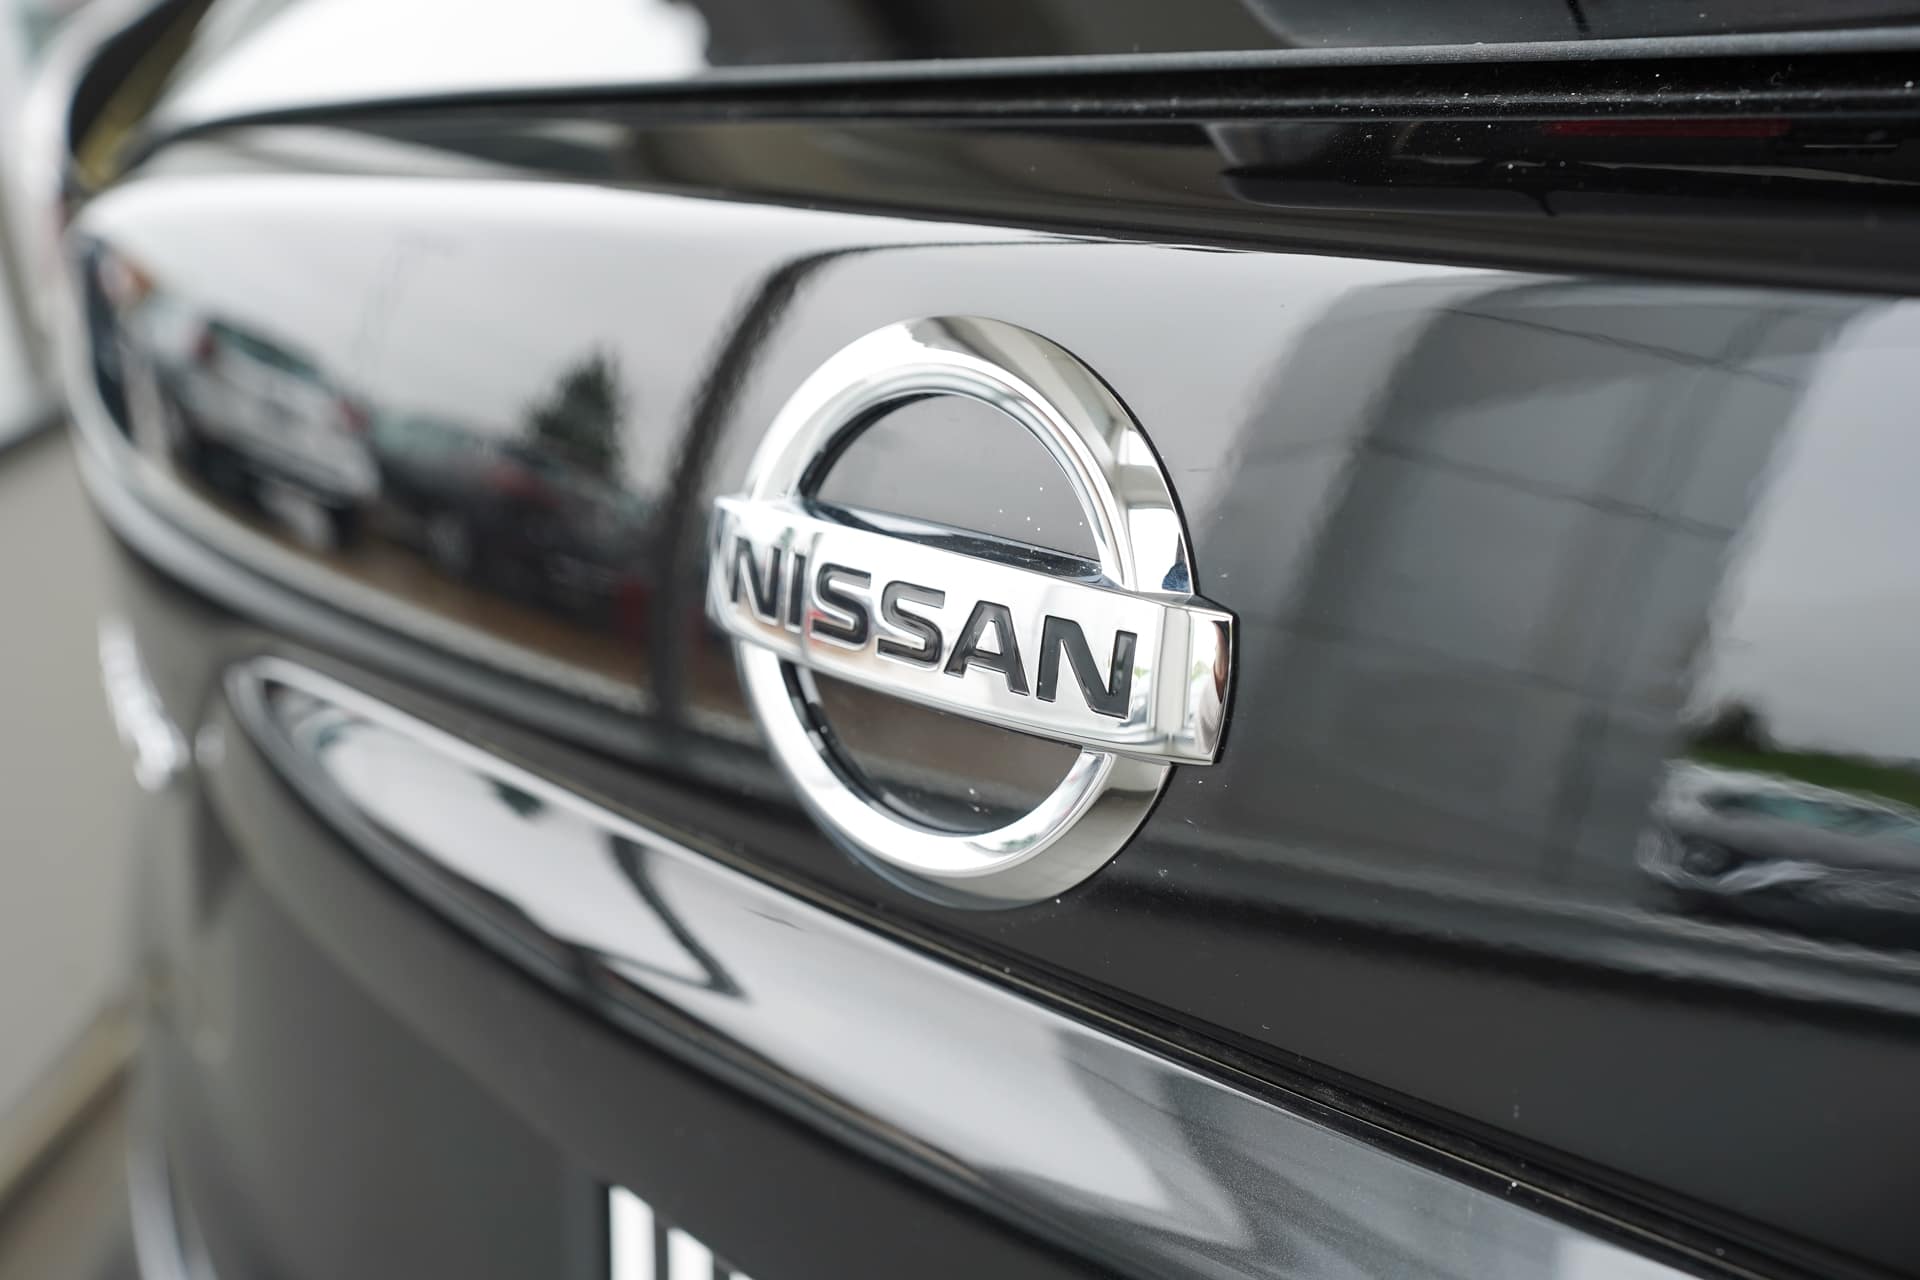 Close up of the Nissan emblem